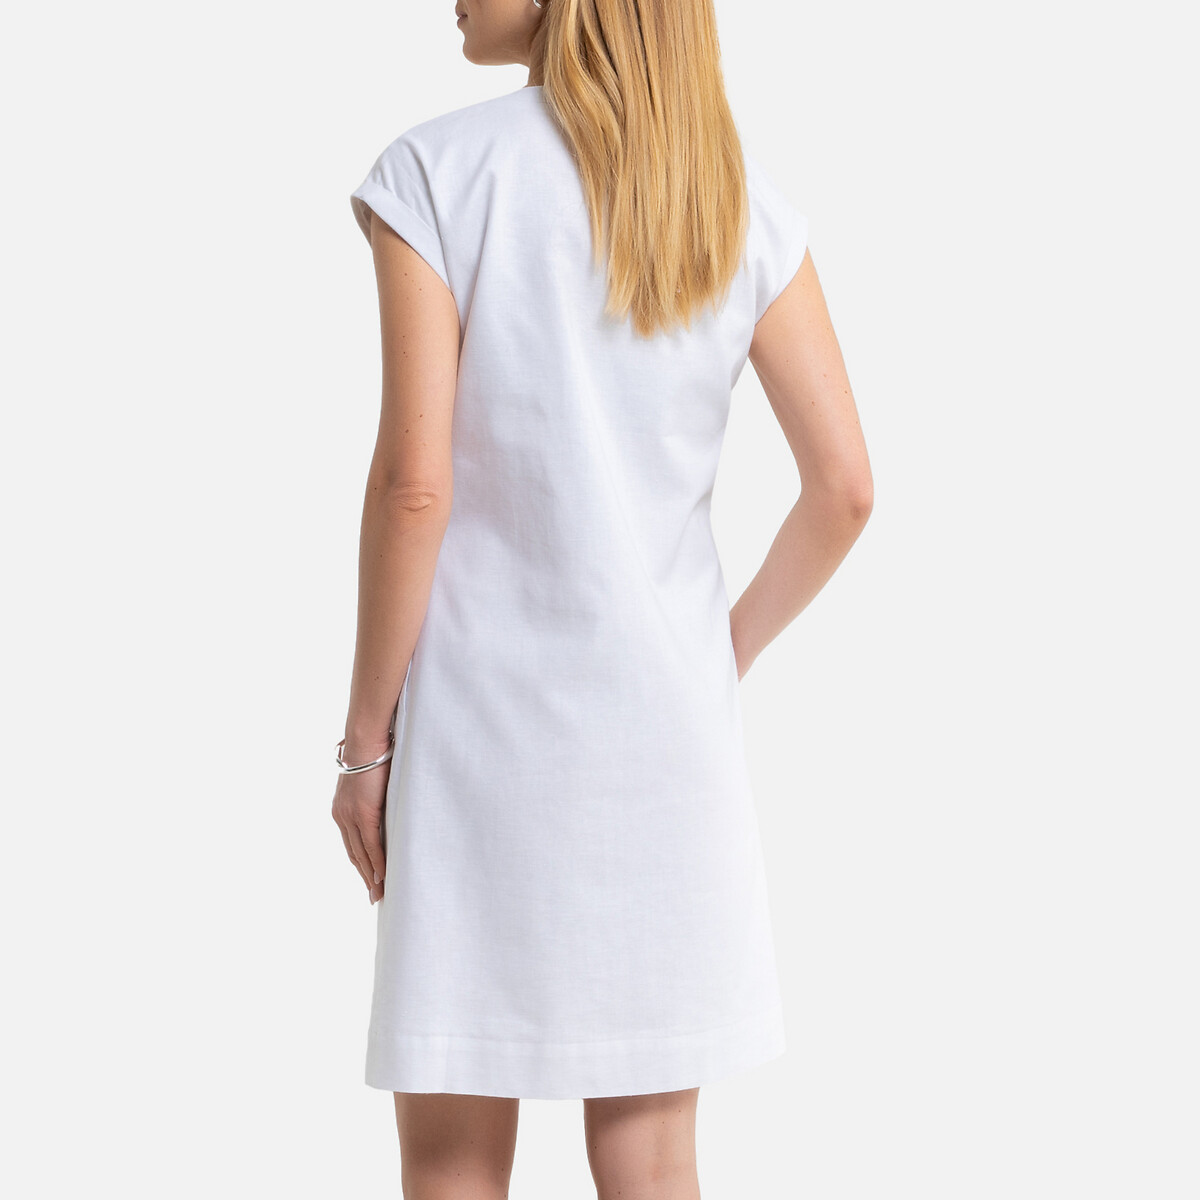 Платье-миди LaRedoute Прямое с короткими рукавами 36 (FR) - 42 (RUS) белый, размер 36 (FR) - 42 (RUS) Прямое с короткими рукавами 36 (FR) - 42 (RUS) белый - фото 4